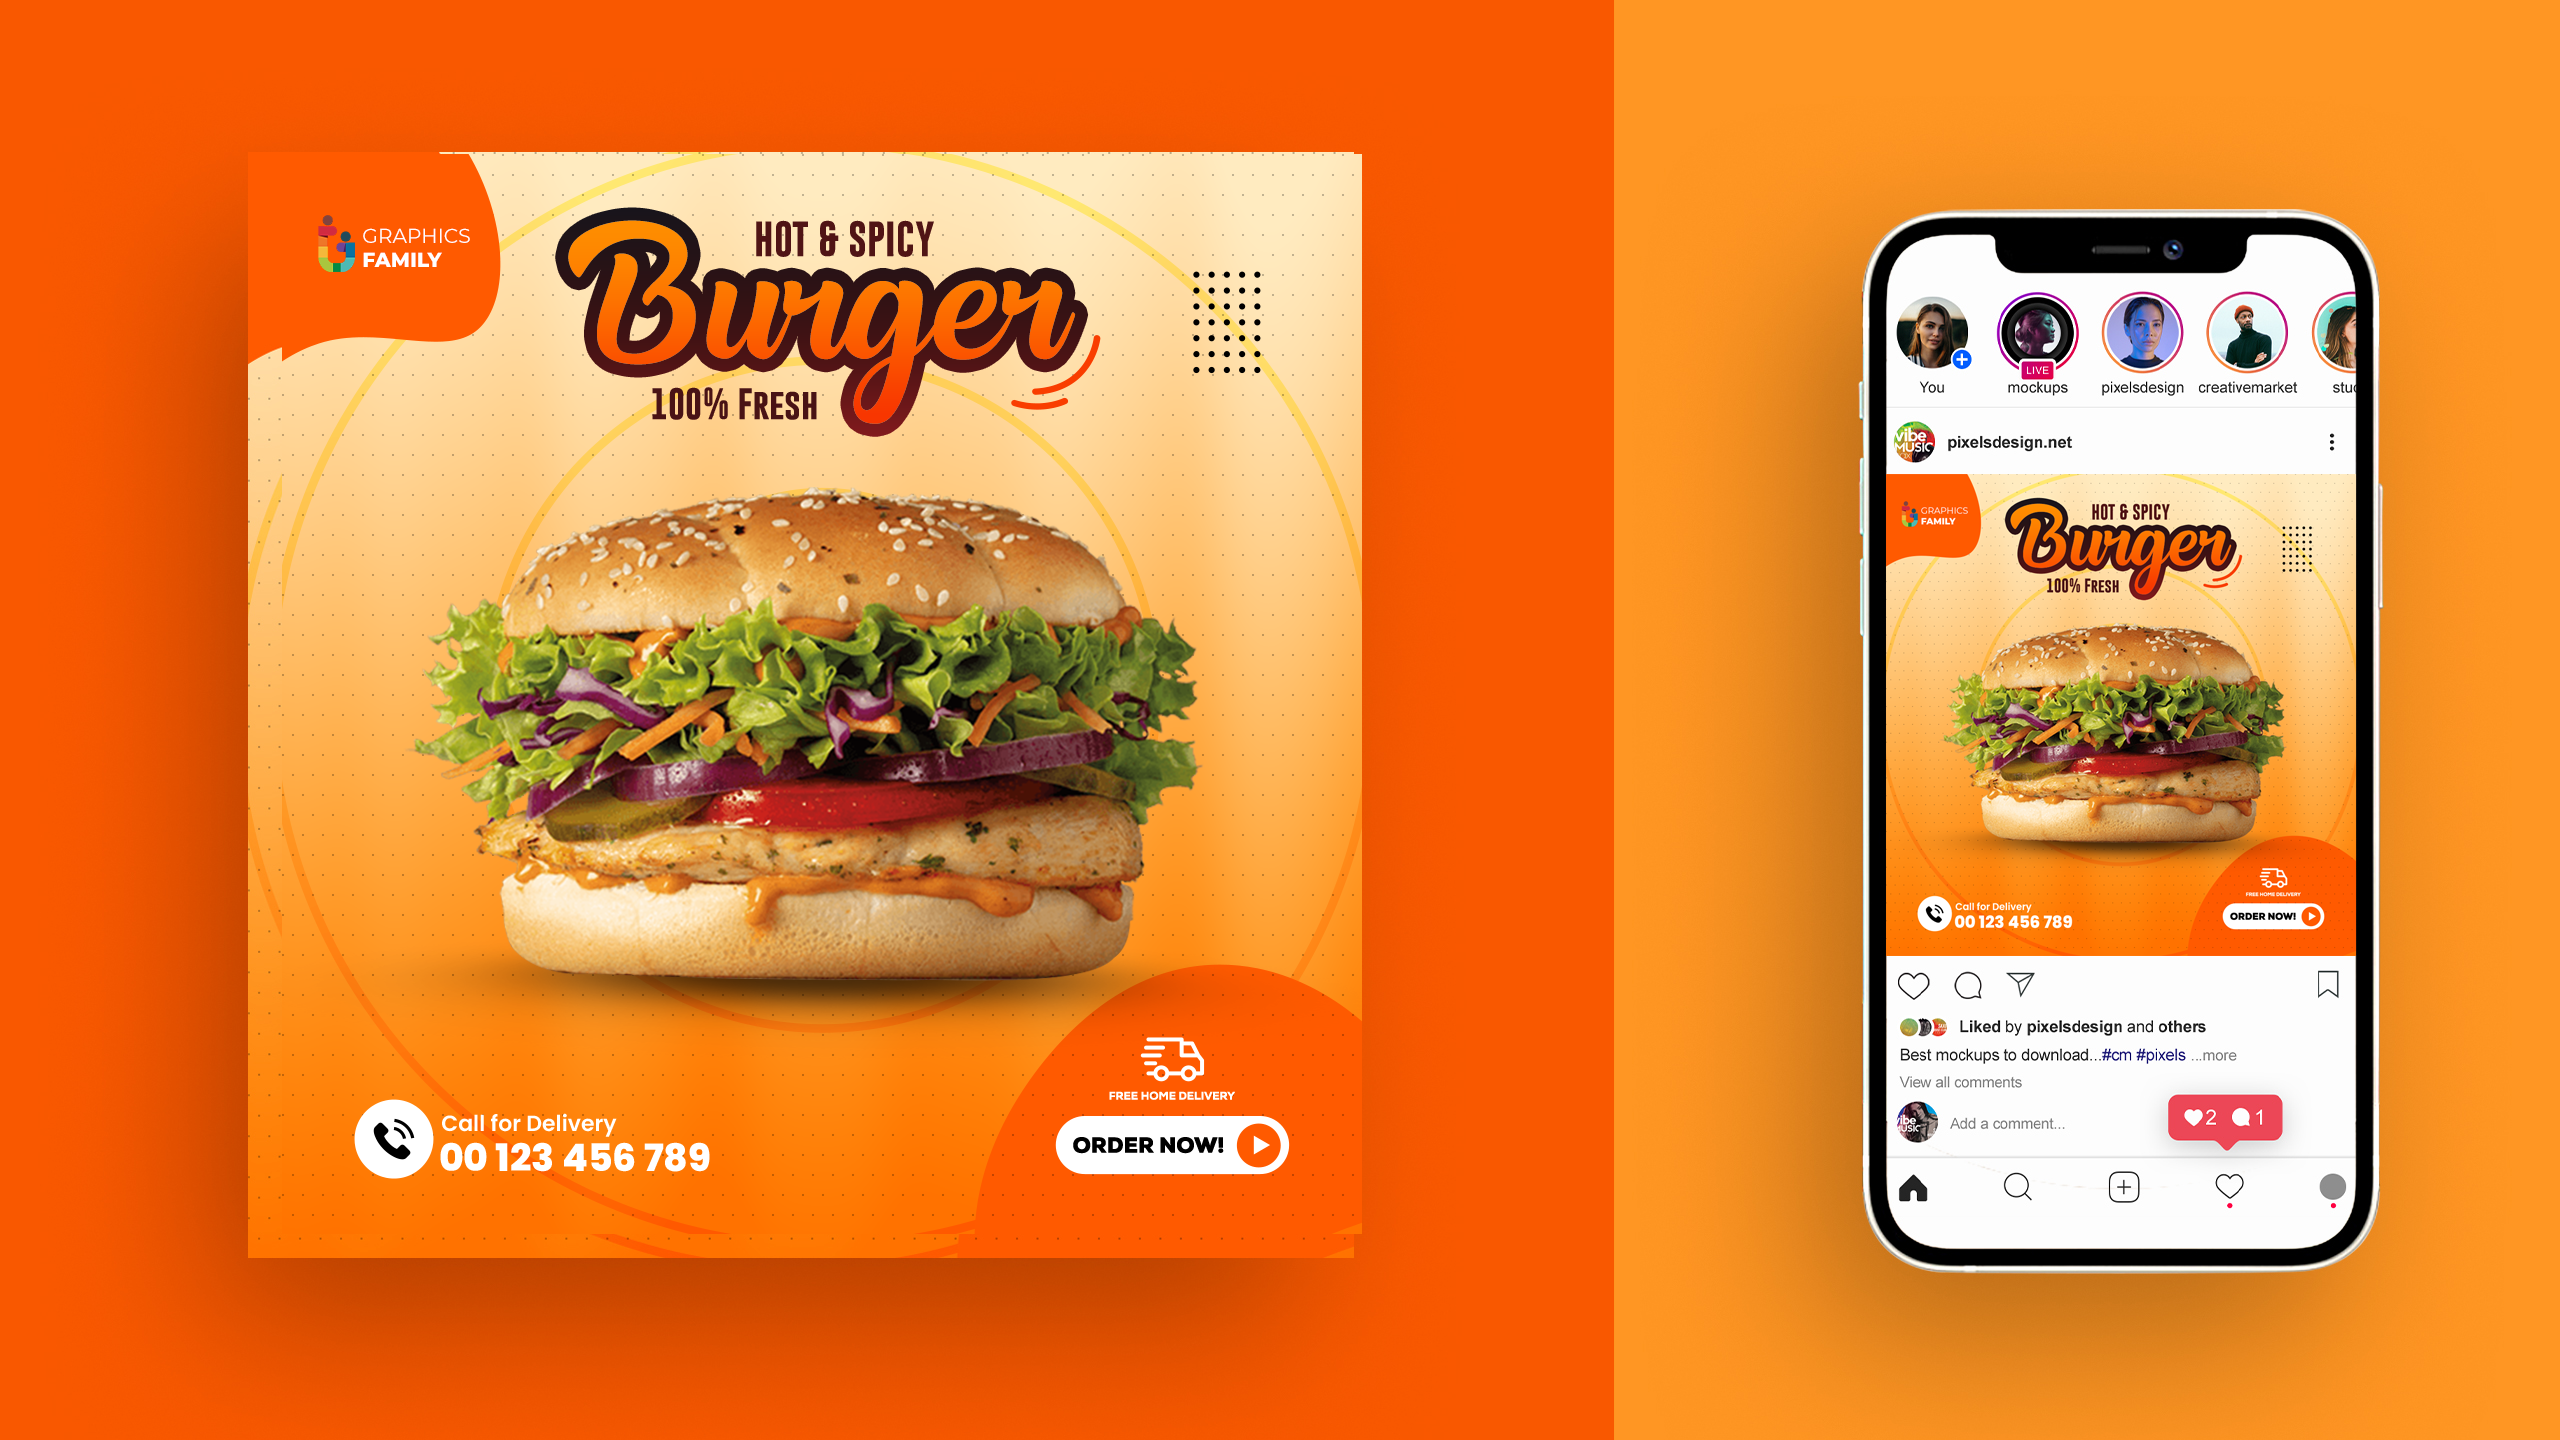 Burgers Fast Food Delivery Social Media Instagram Post Banner